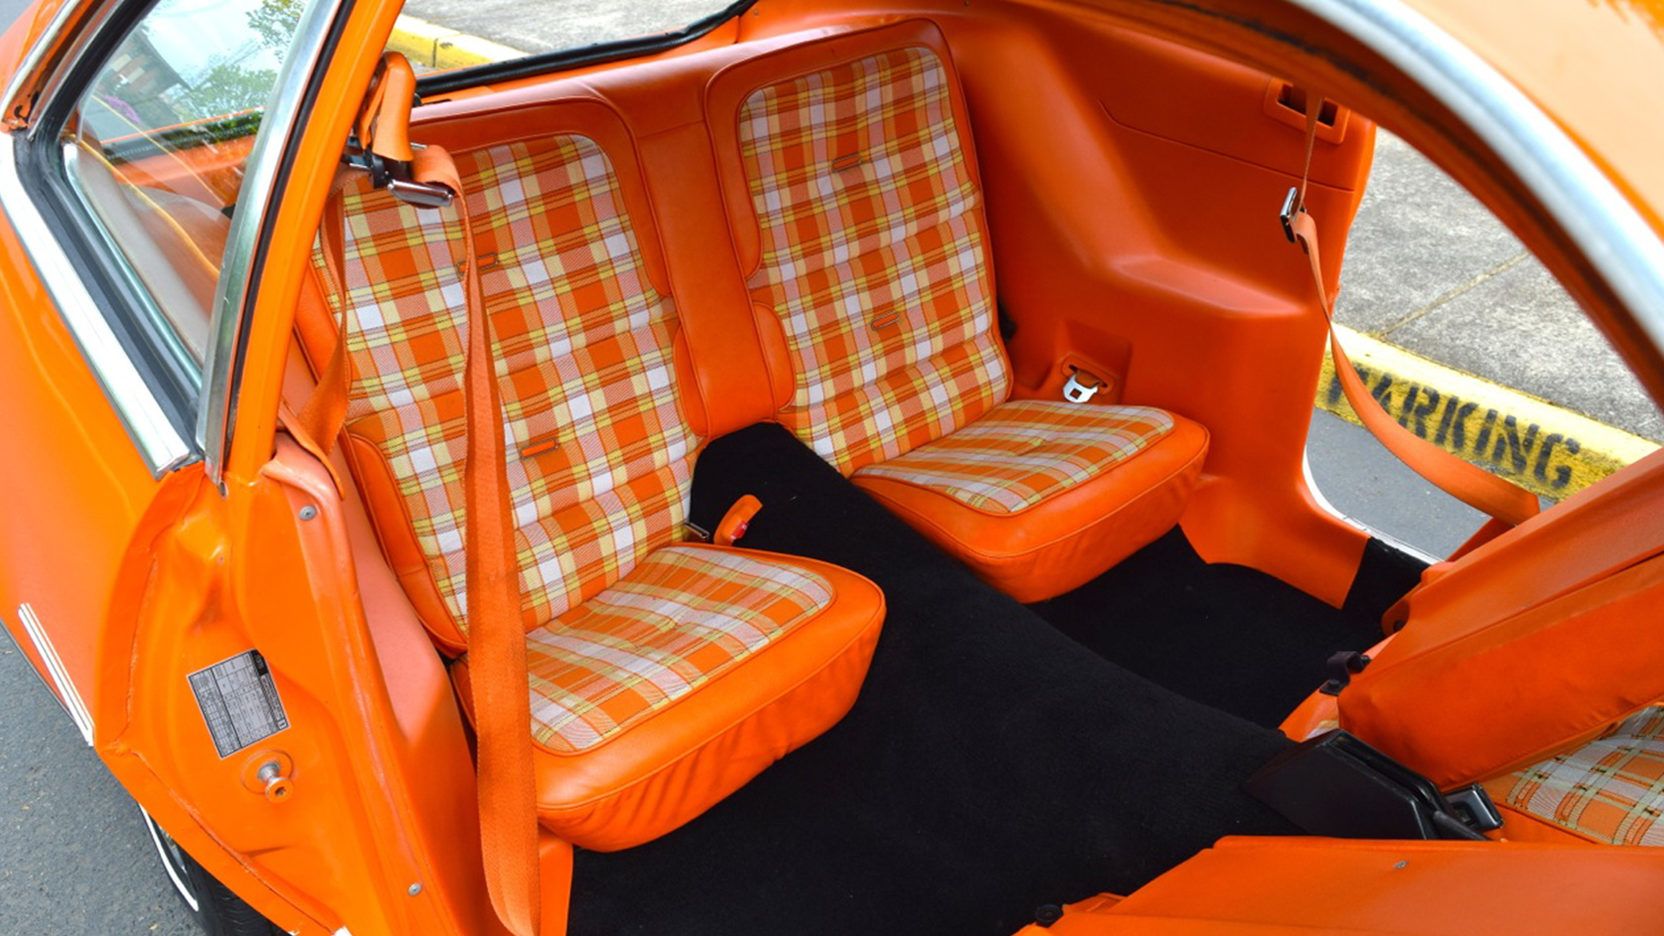 Backseat upholstered in orange plaid